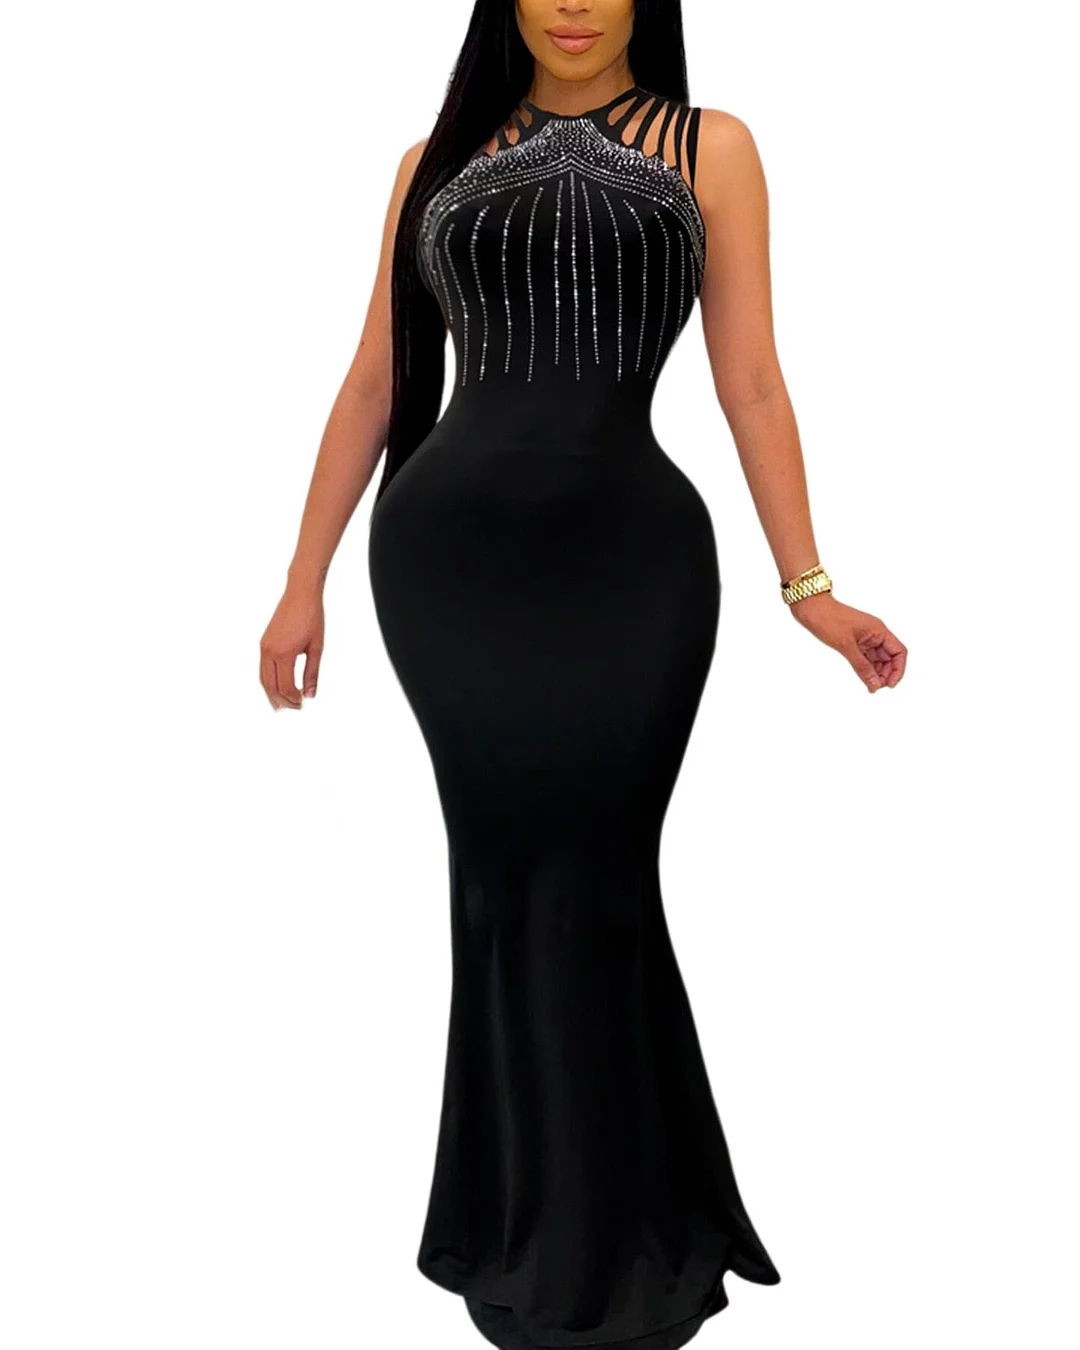 ANJAMANOR Elegant Sexy Evening Dresses for Women Party Classy Night Club Sparkle Rhinestone Black Bodycon Maxi Dress D35-DI30